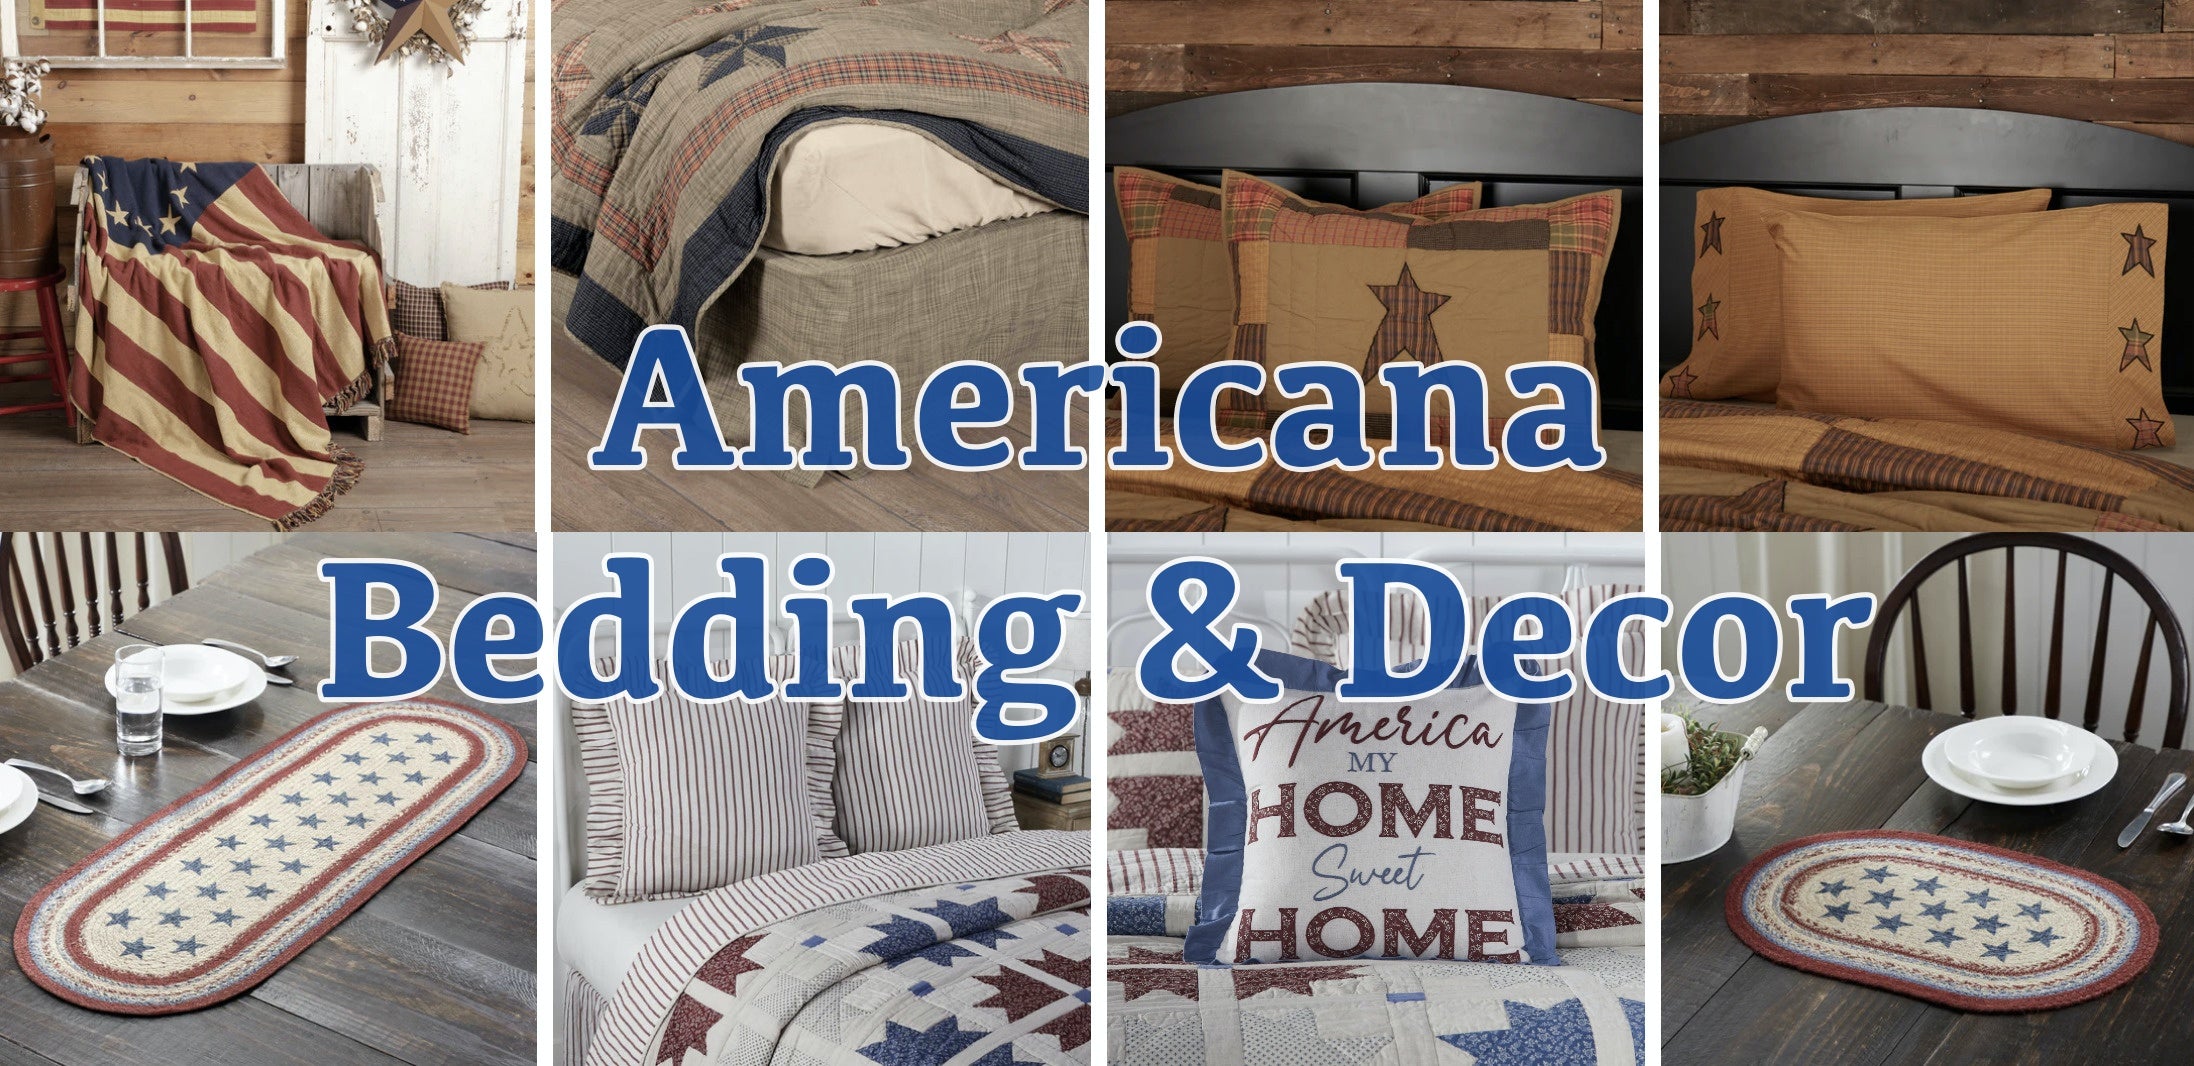 Americana Bedding and Decor